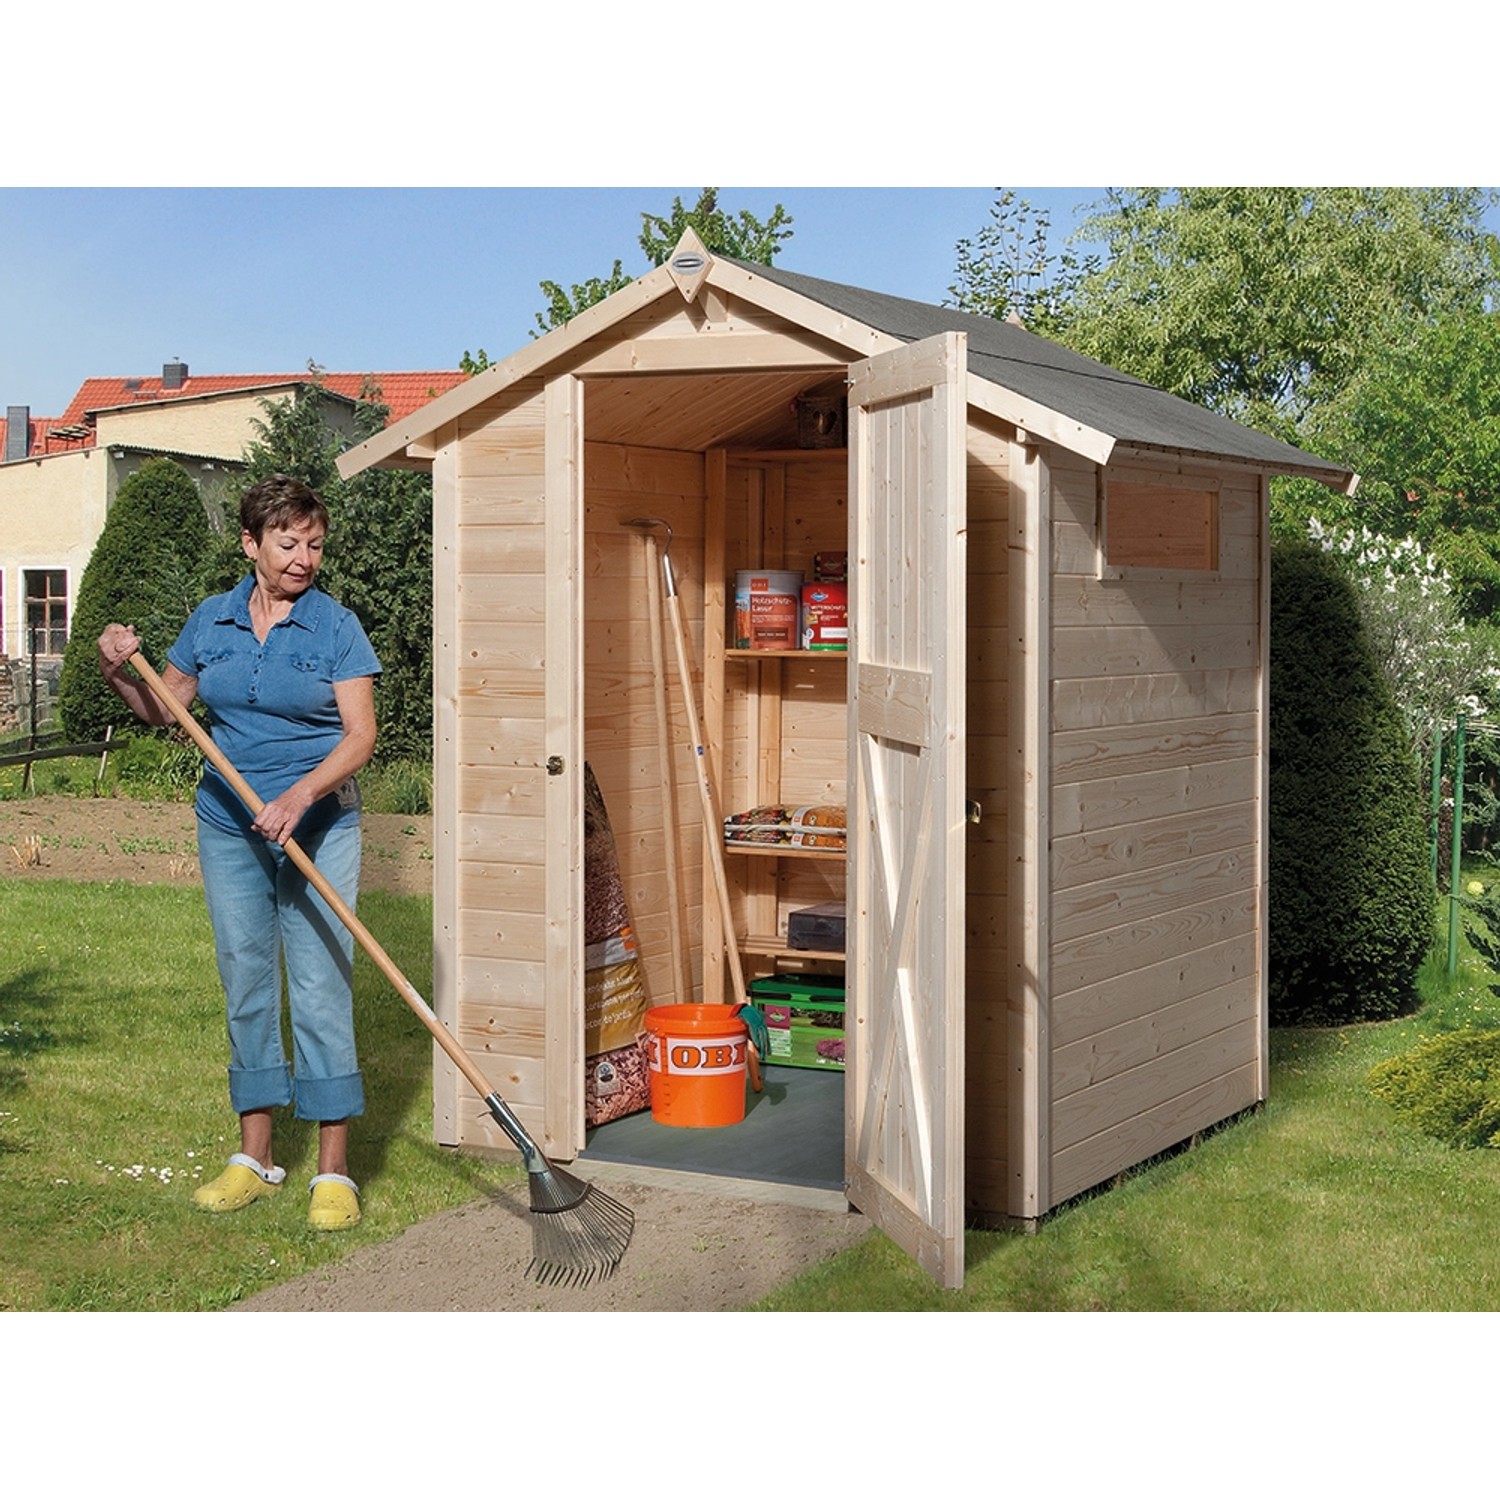 OBI Outdoor Living Holz-Gartenhaus Kompakt Satteldach 152 cm x 171 cm von OBI Outdoor Living